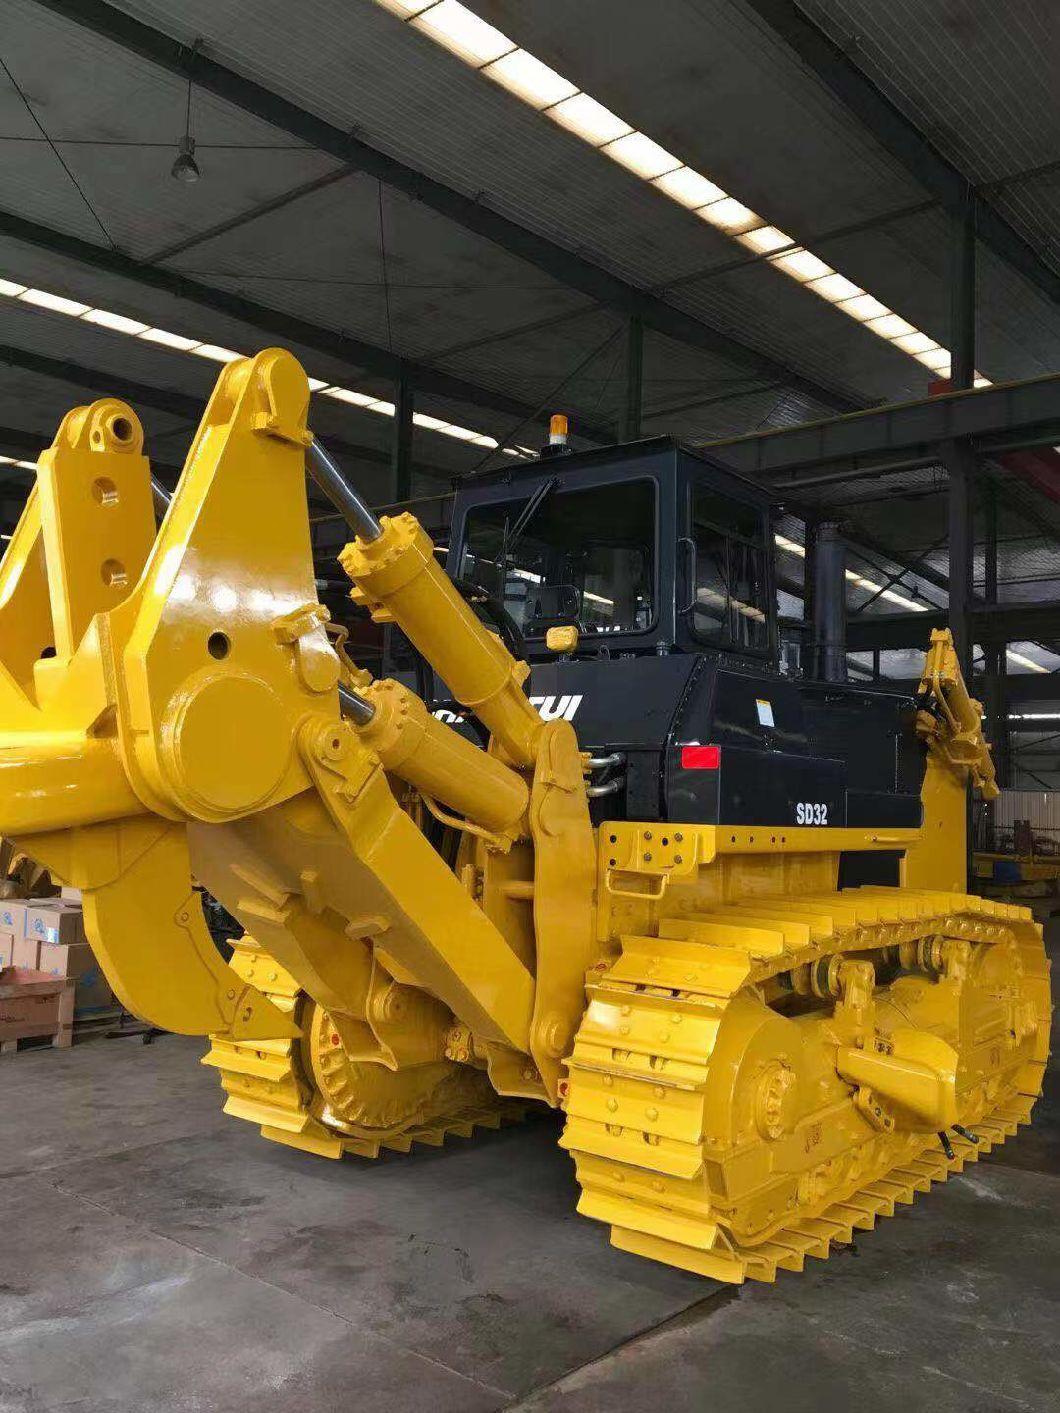 Dooxin Bulldozer, Doosan Technology Construction Machinery for Sale